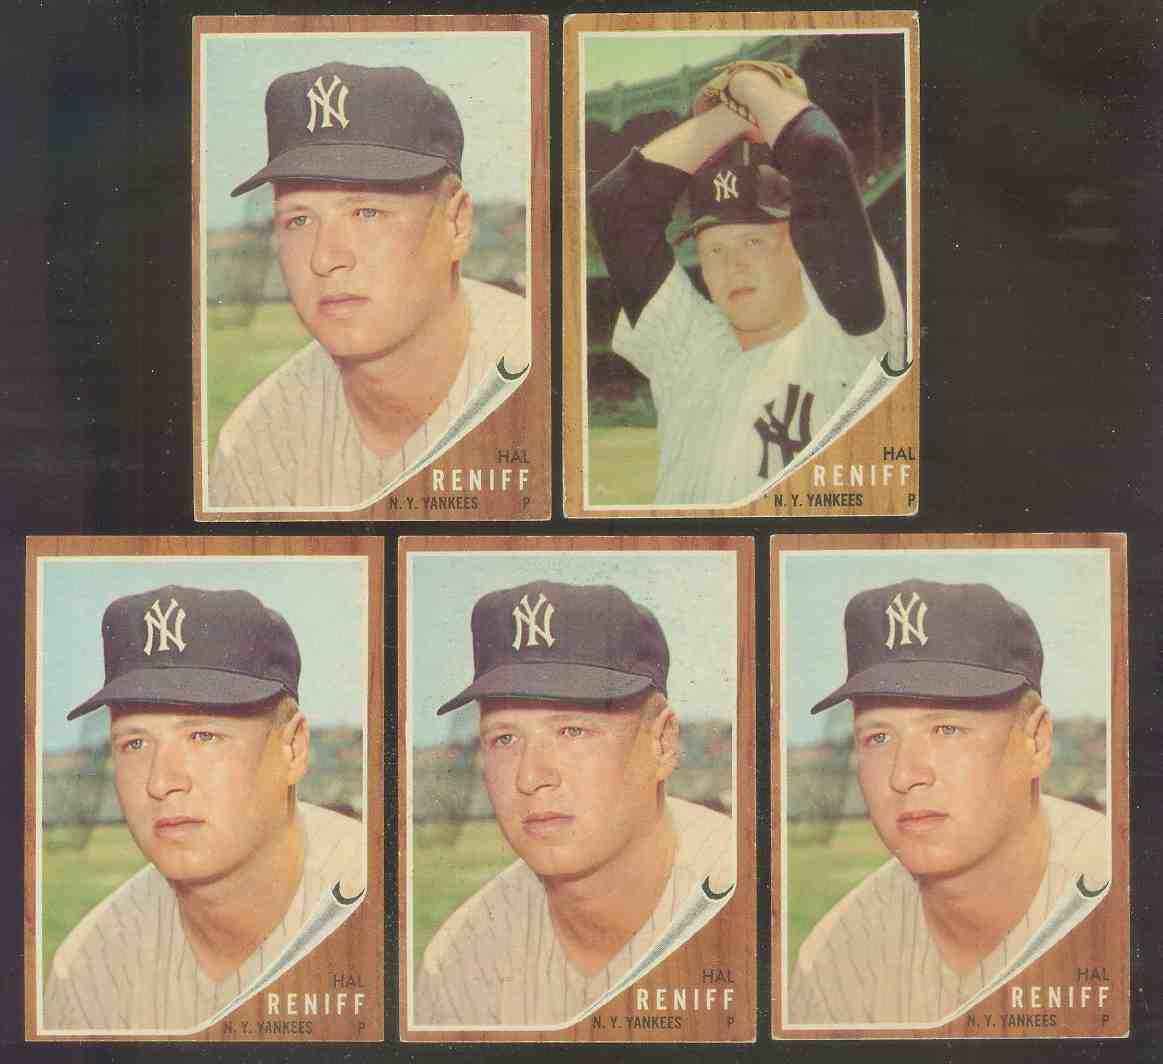 1962 Topps #139C Hal Reniff ROOKIE [VAR:Pitching] (Yankees) Baseball cards value